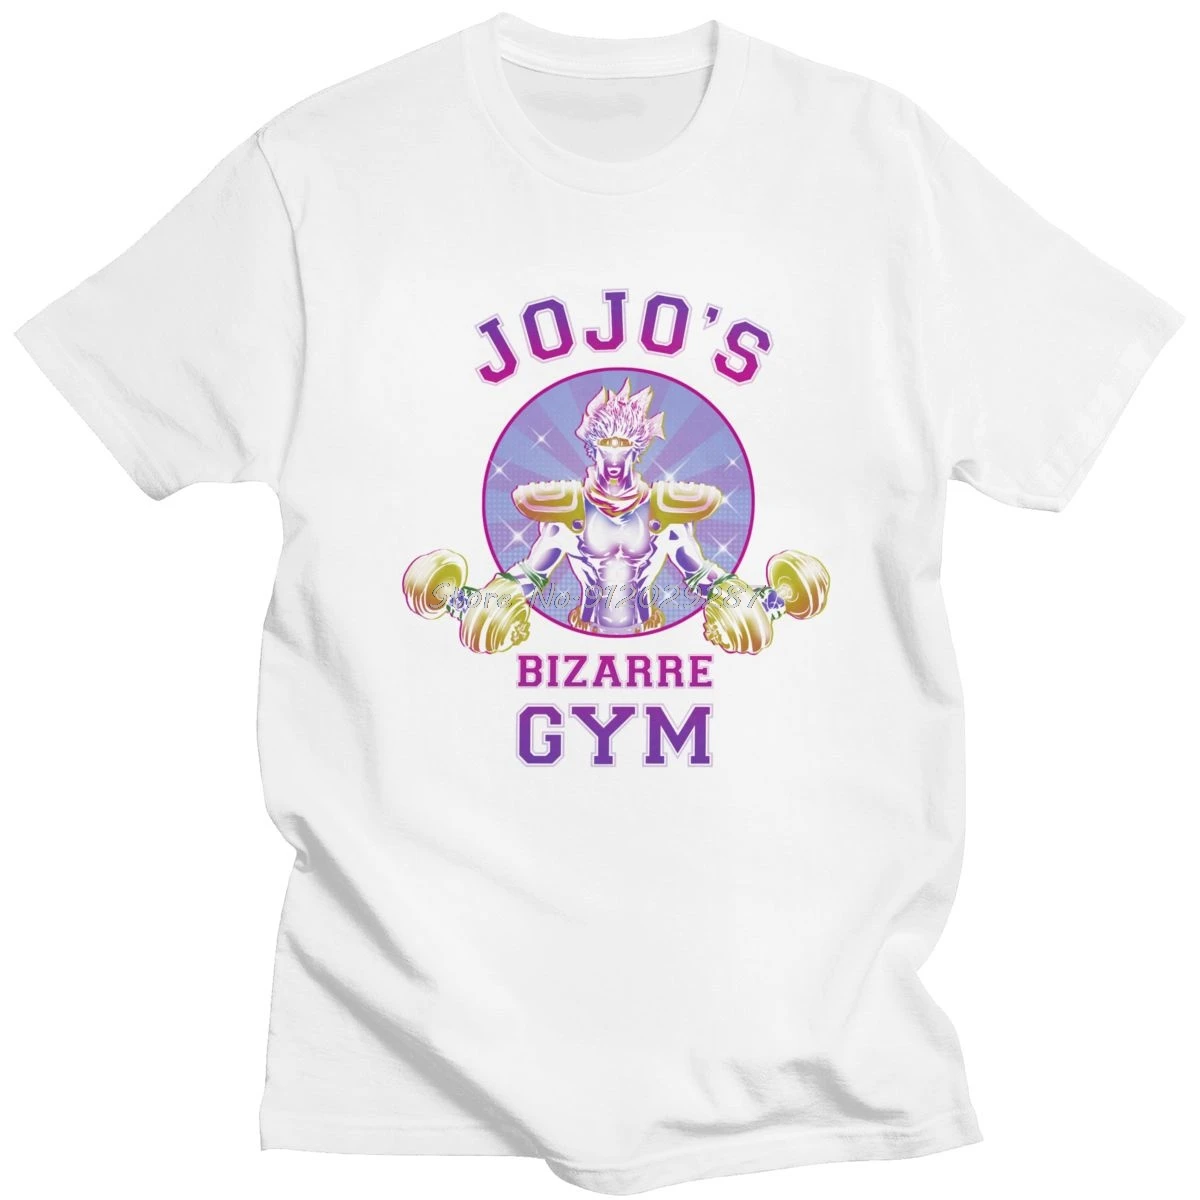 Funny Men s Jotaro Kujo Gym T Shirt Short Sleeve Cotton Graphic T Shirts Jojo Bizarre 1 - JoJo's Bizarre Adventure Shop